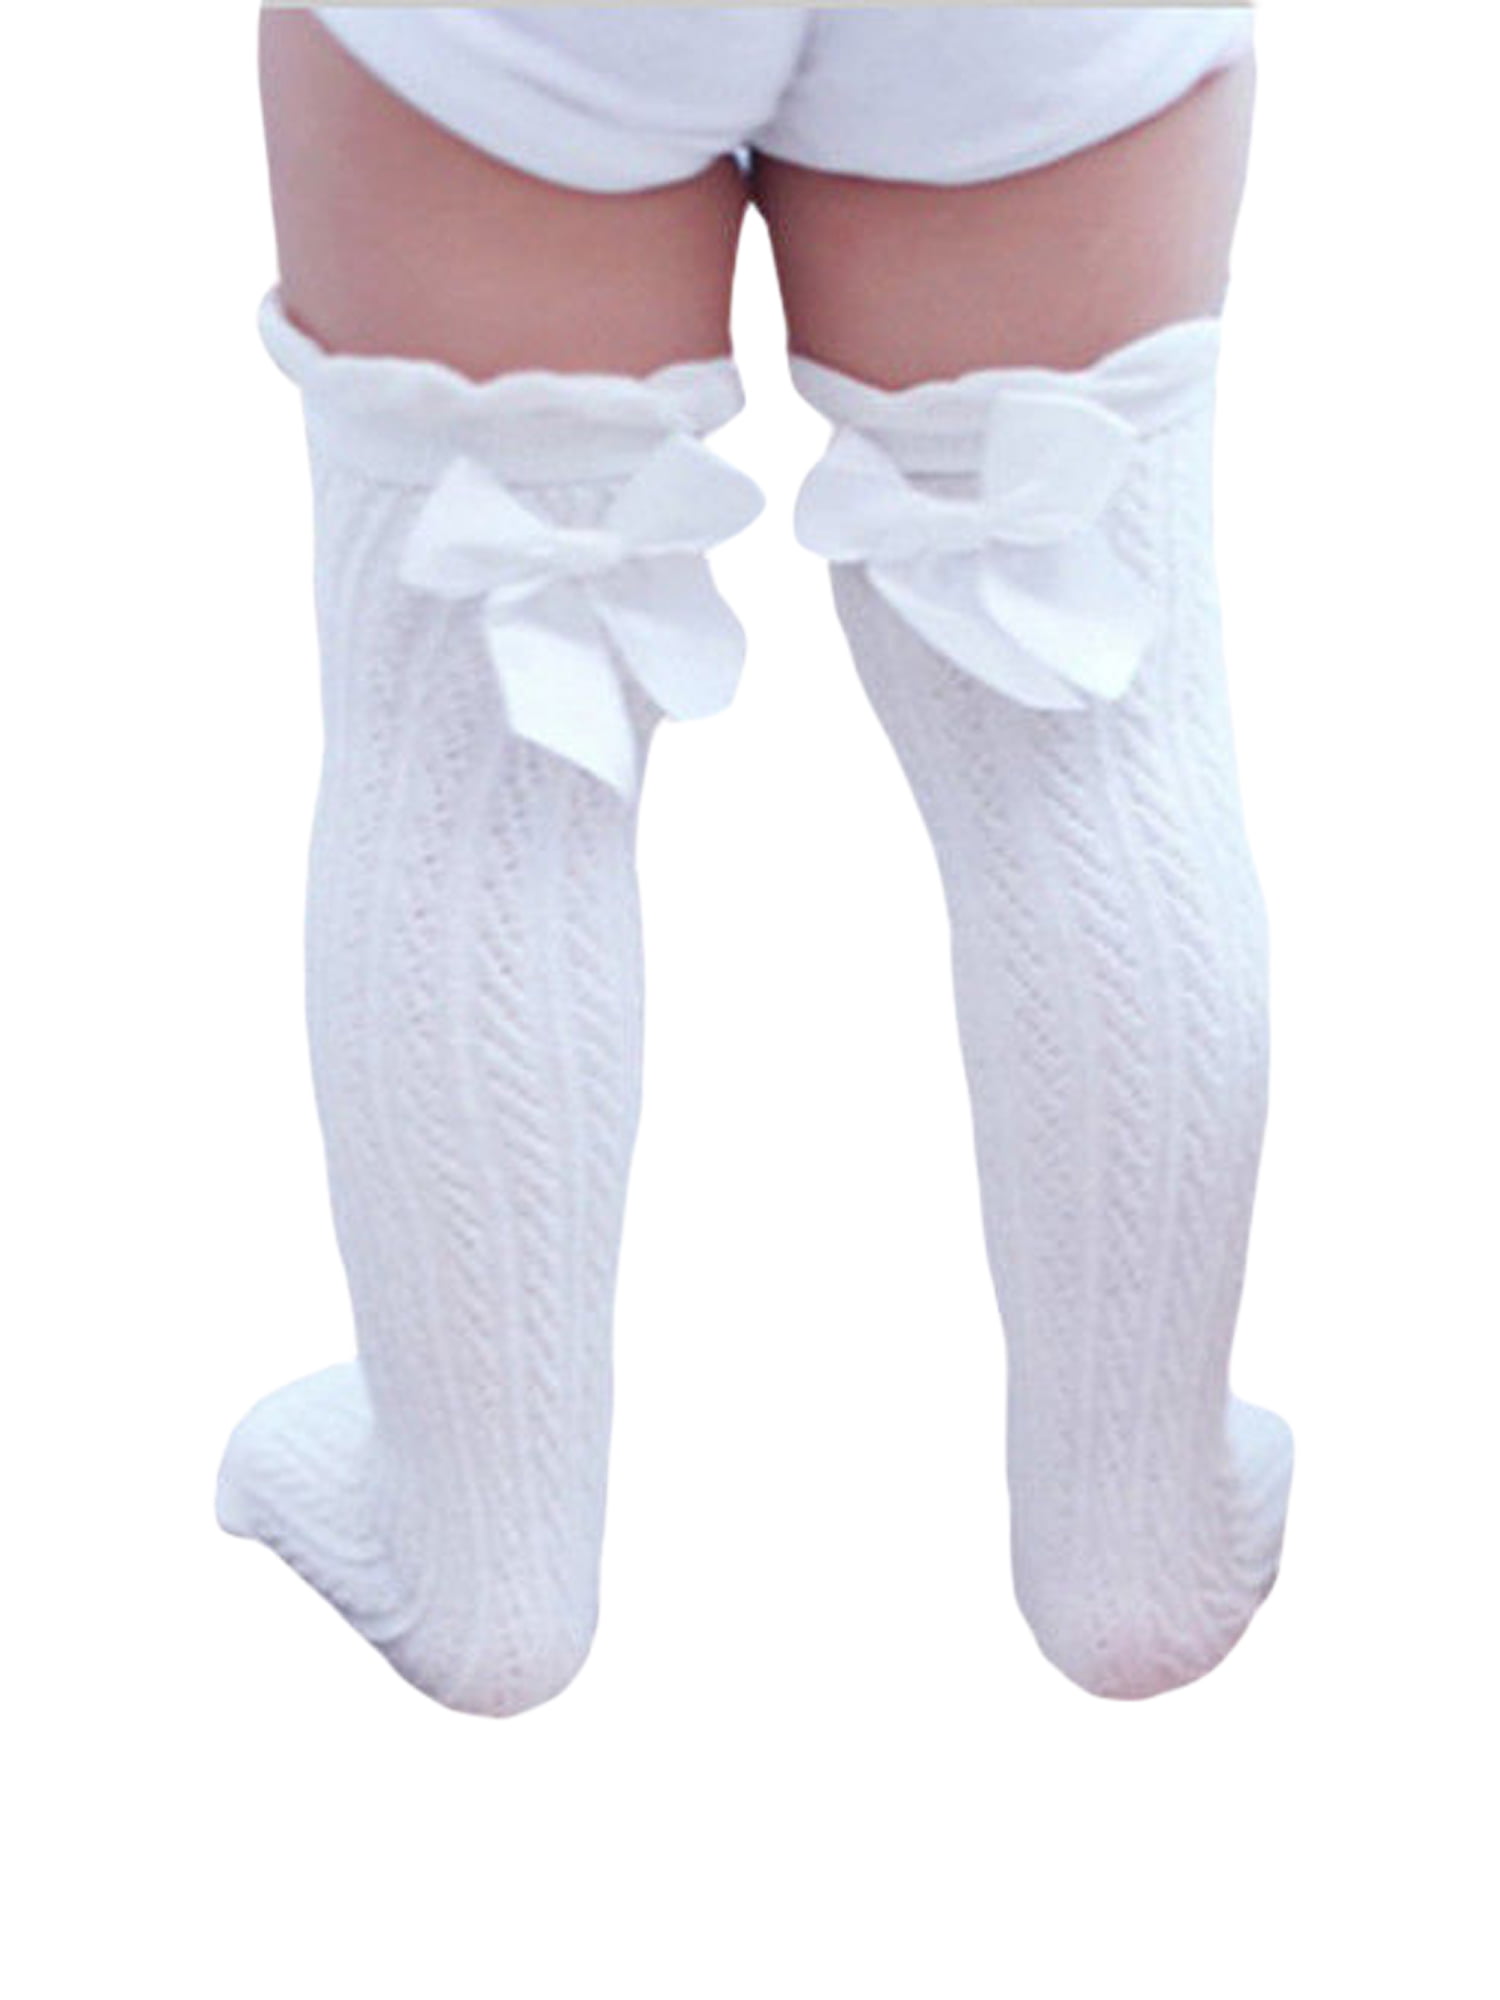 Toddler Kid Baby Girl Knee High Long Socks Bow Cotton Casual Stockings Socks US 